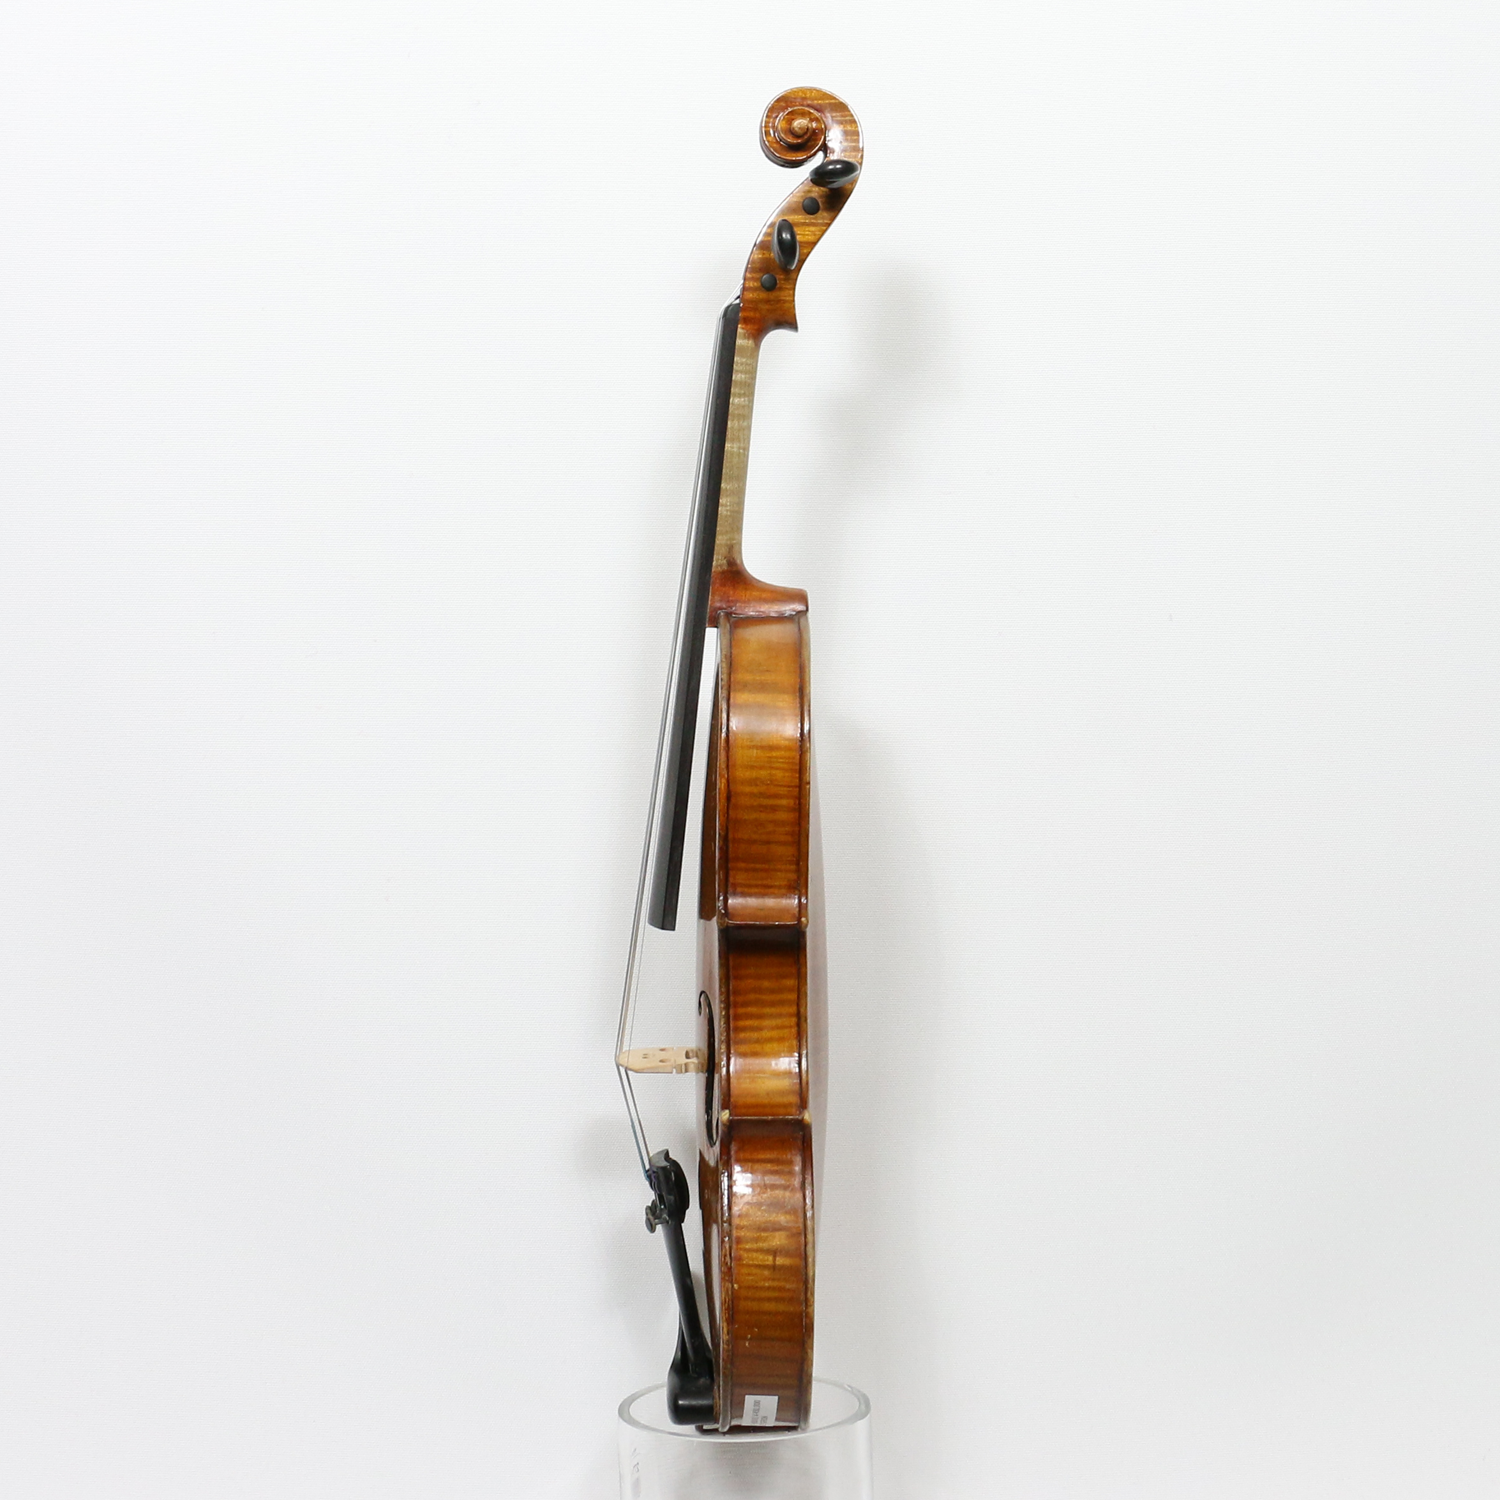 RUDOLF SOFRON|弦楽器|バイオリン|ストラディ金沢|バイオリン販売・買取